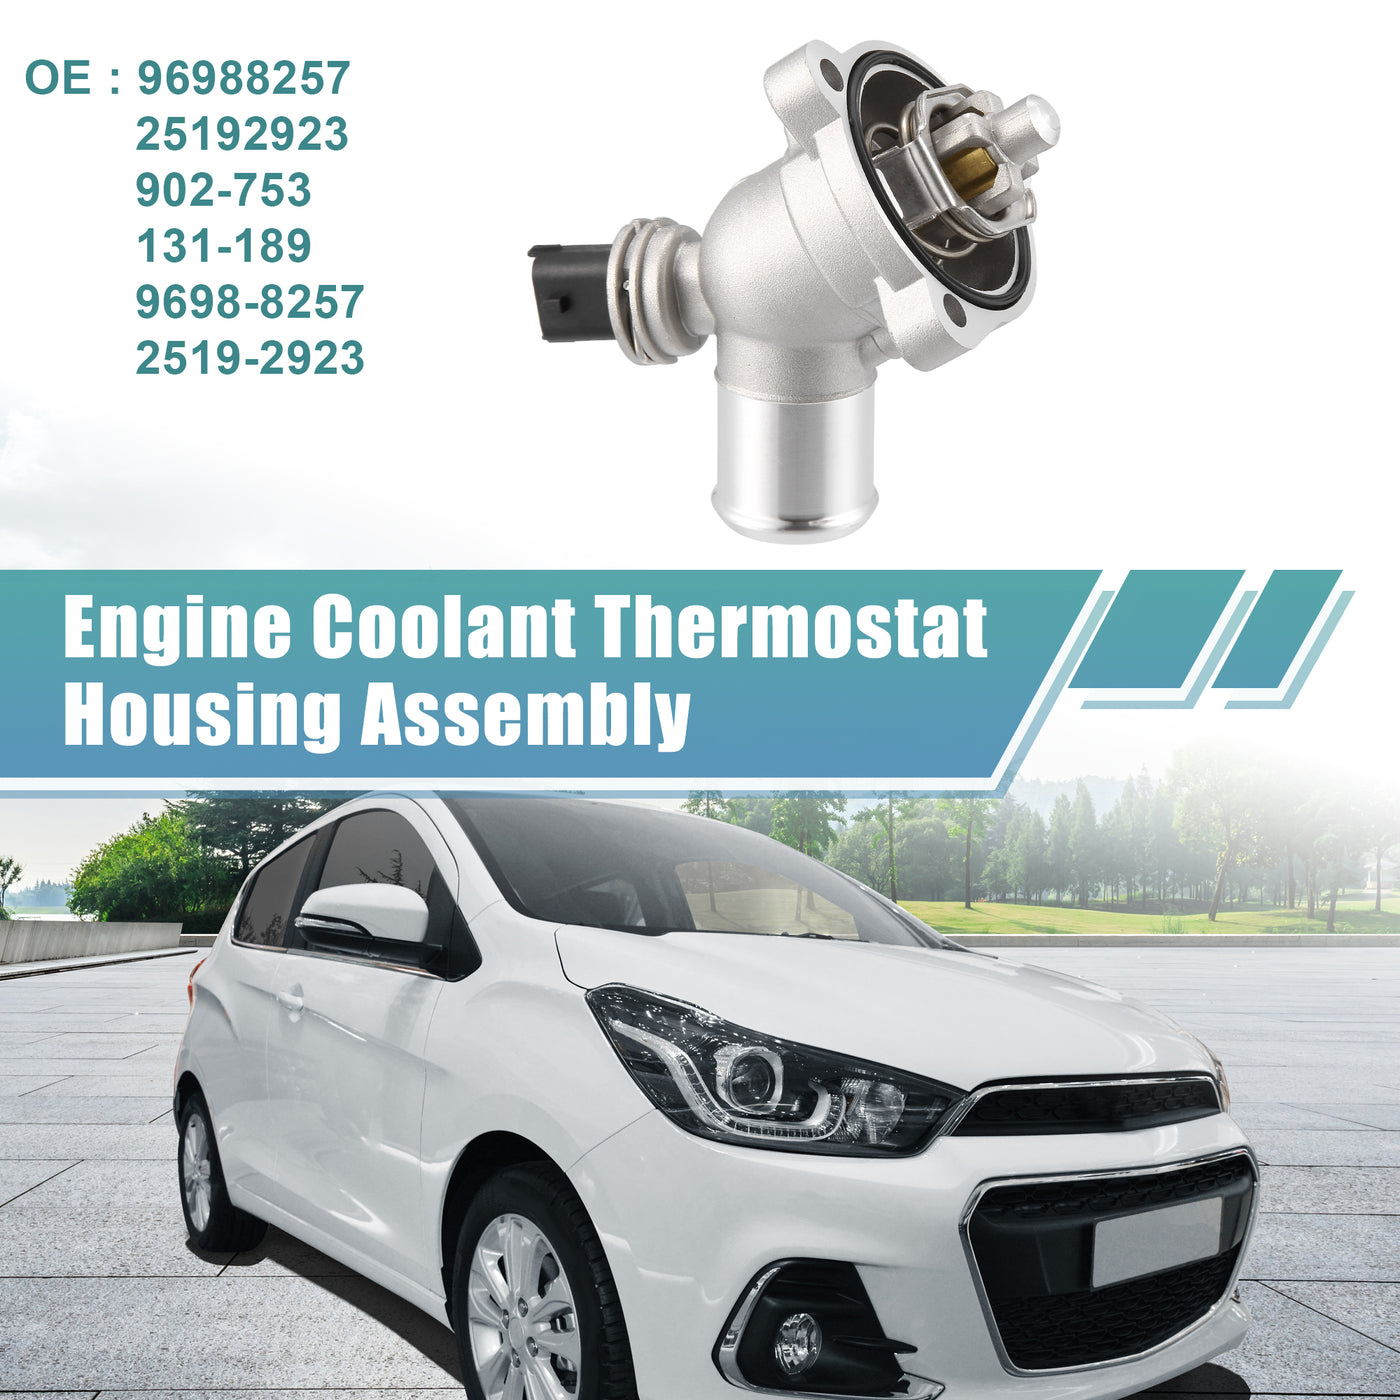 X AUTOHAUX 96988257 Engine Coolant Thermostat Housing Assembly for Chevy Spark 2013 2014 2015LS LT Hatchback 4-Door 25192923 902-753